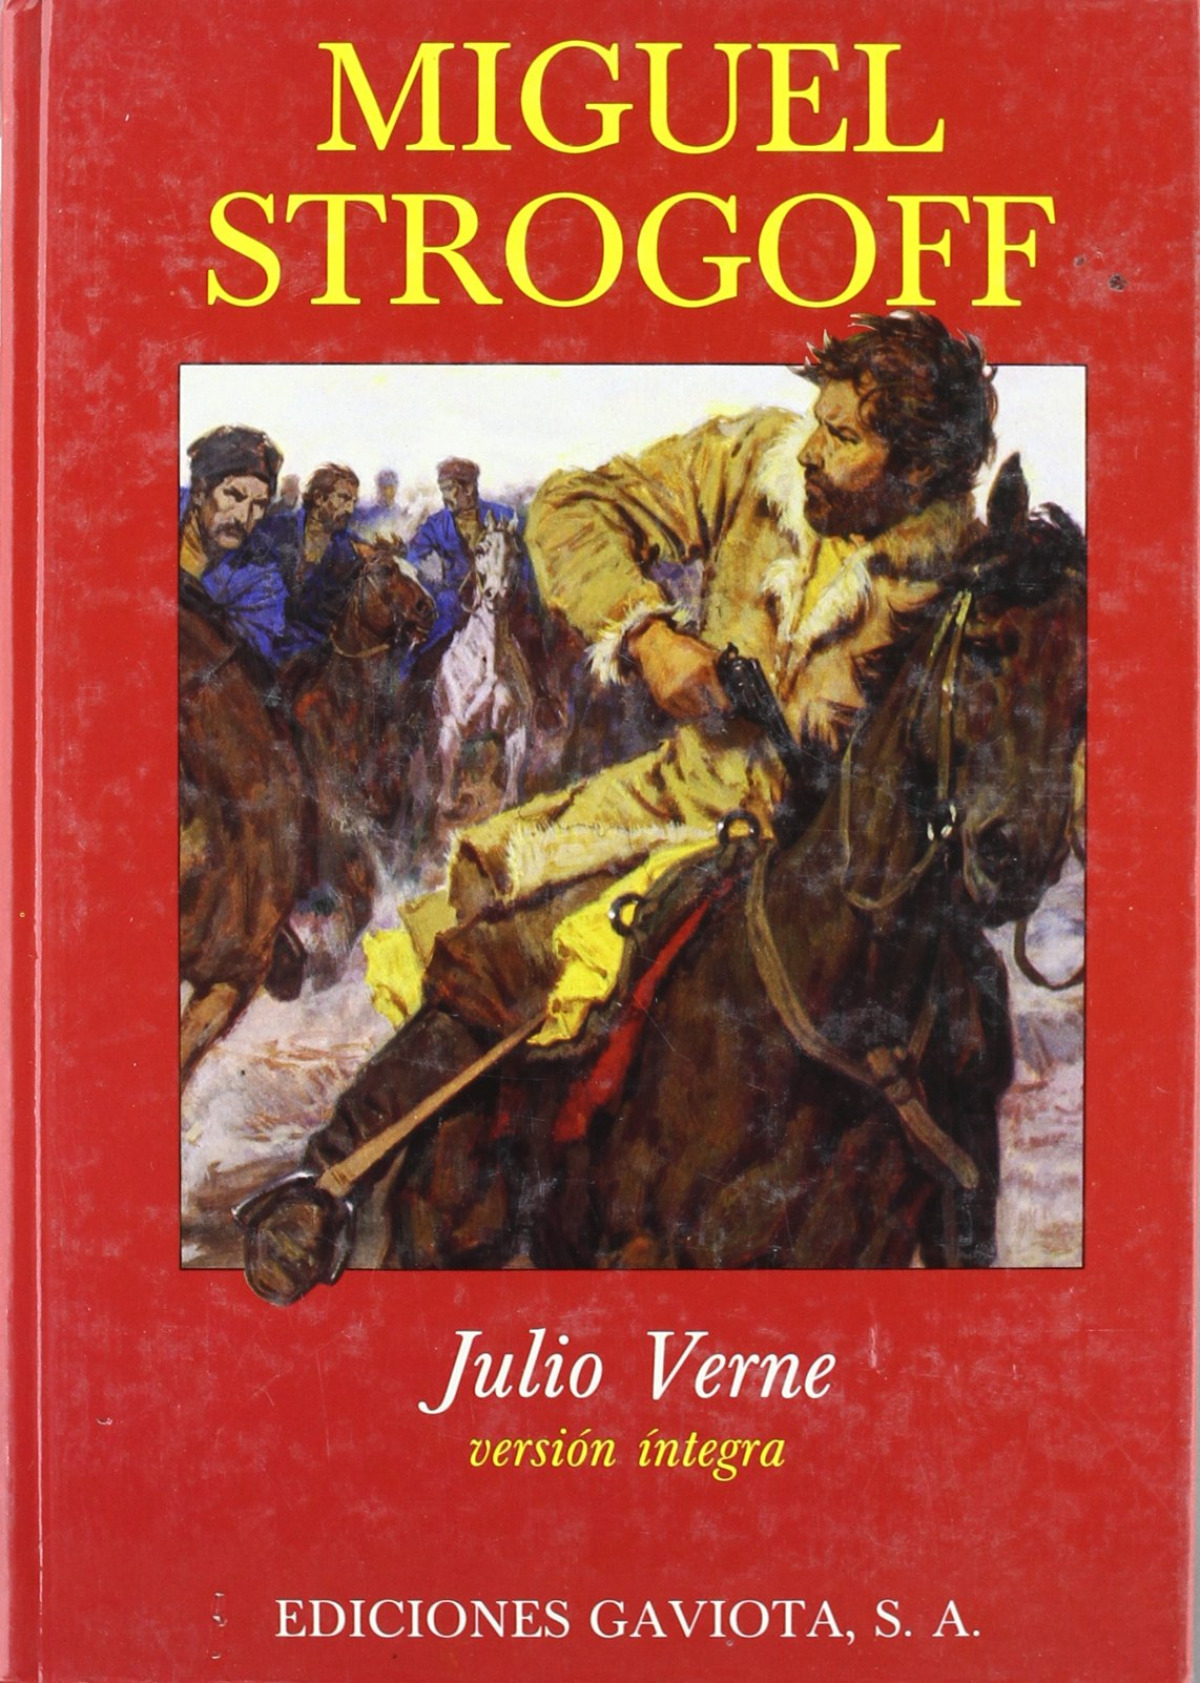 Miguel strogoff - Julio Verne